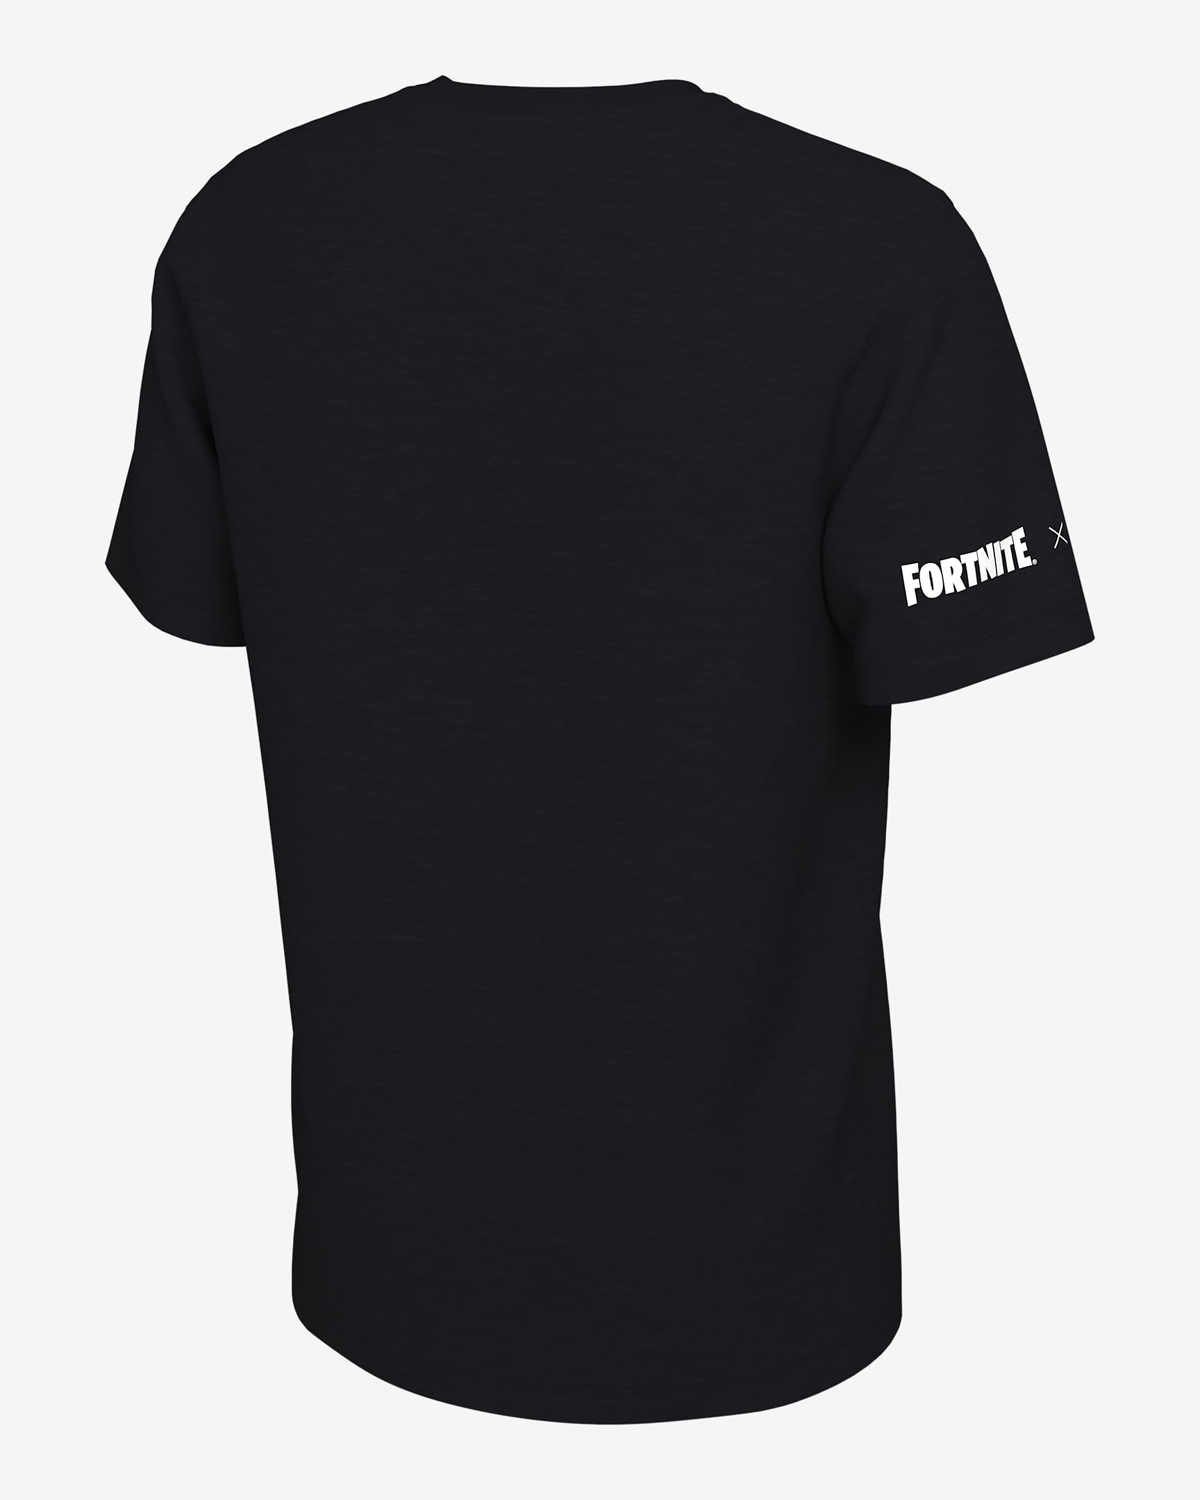 Nike-Fortnite-Airphoria-T-Shirt-Black-3